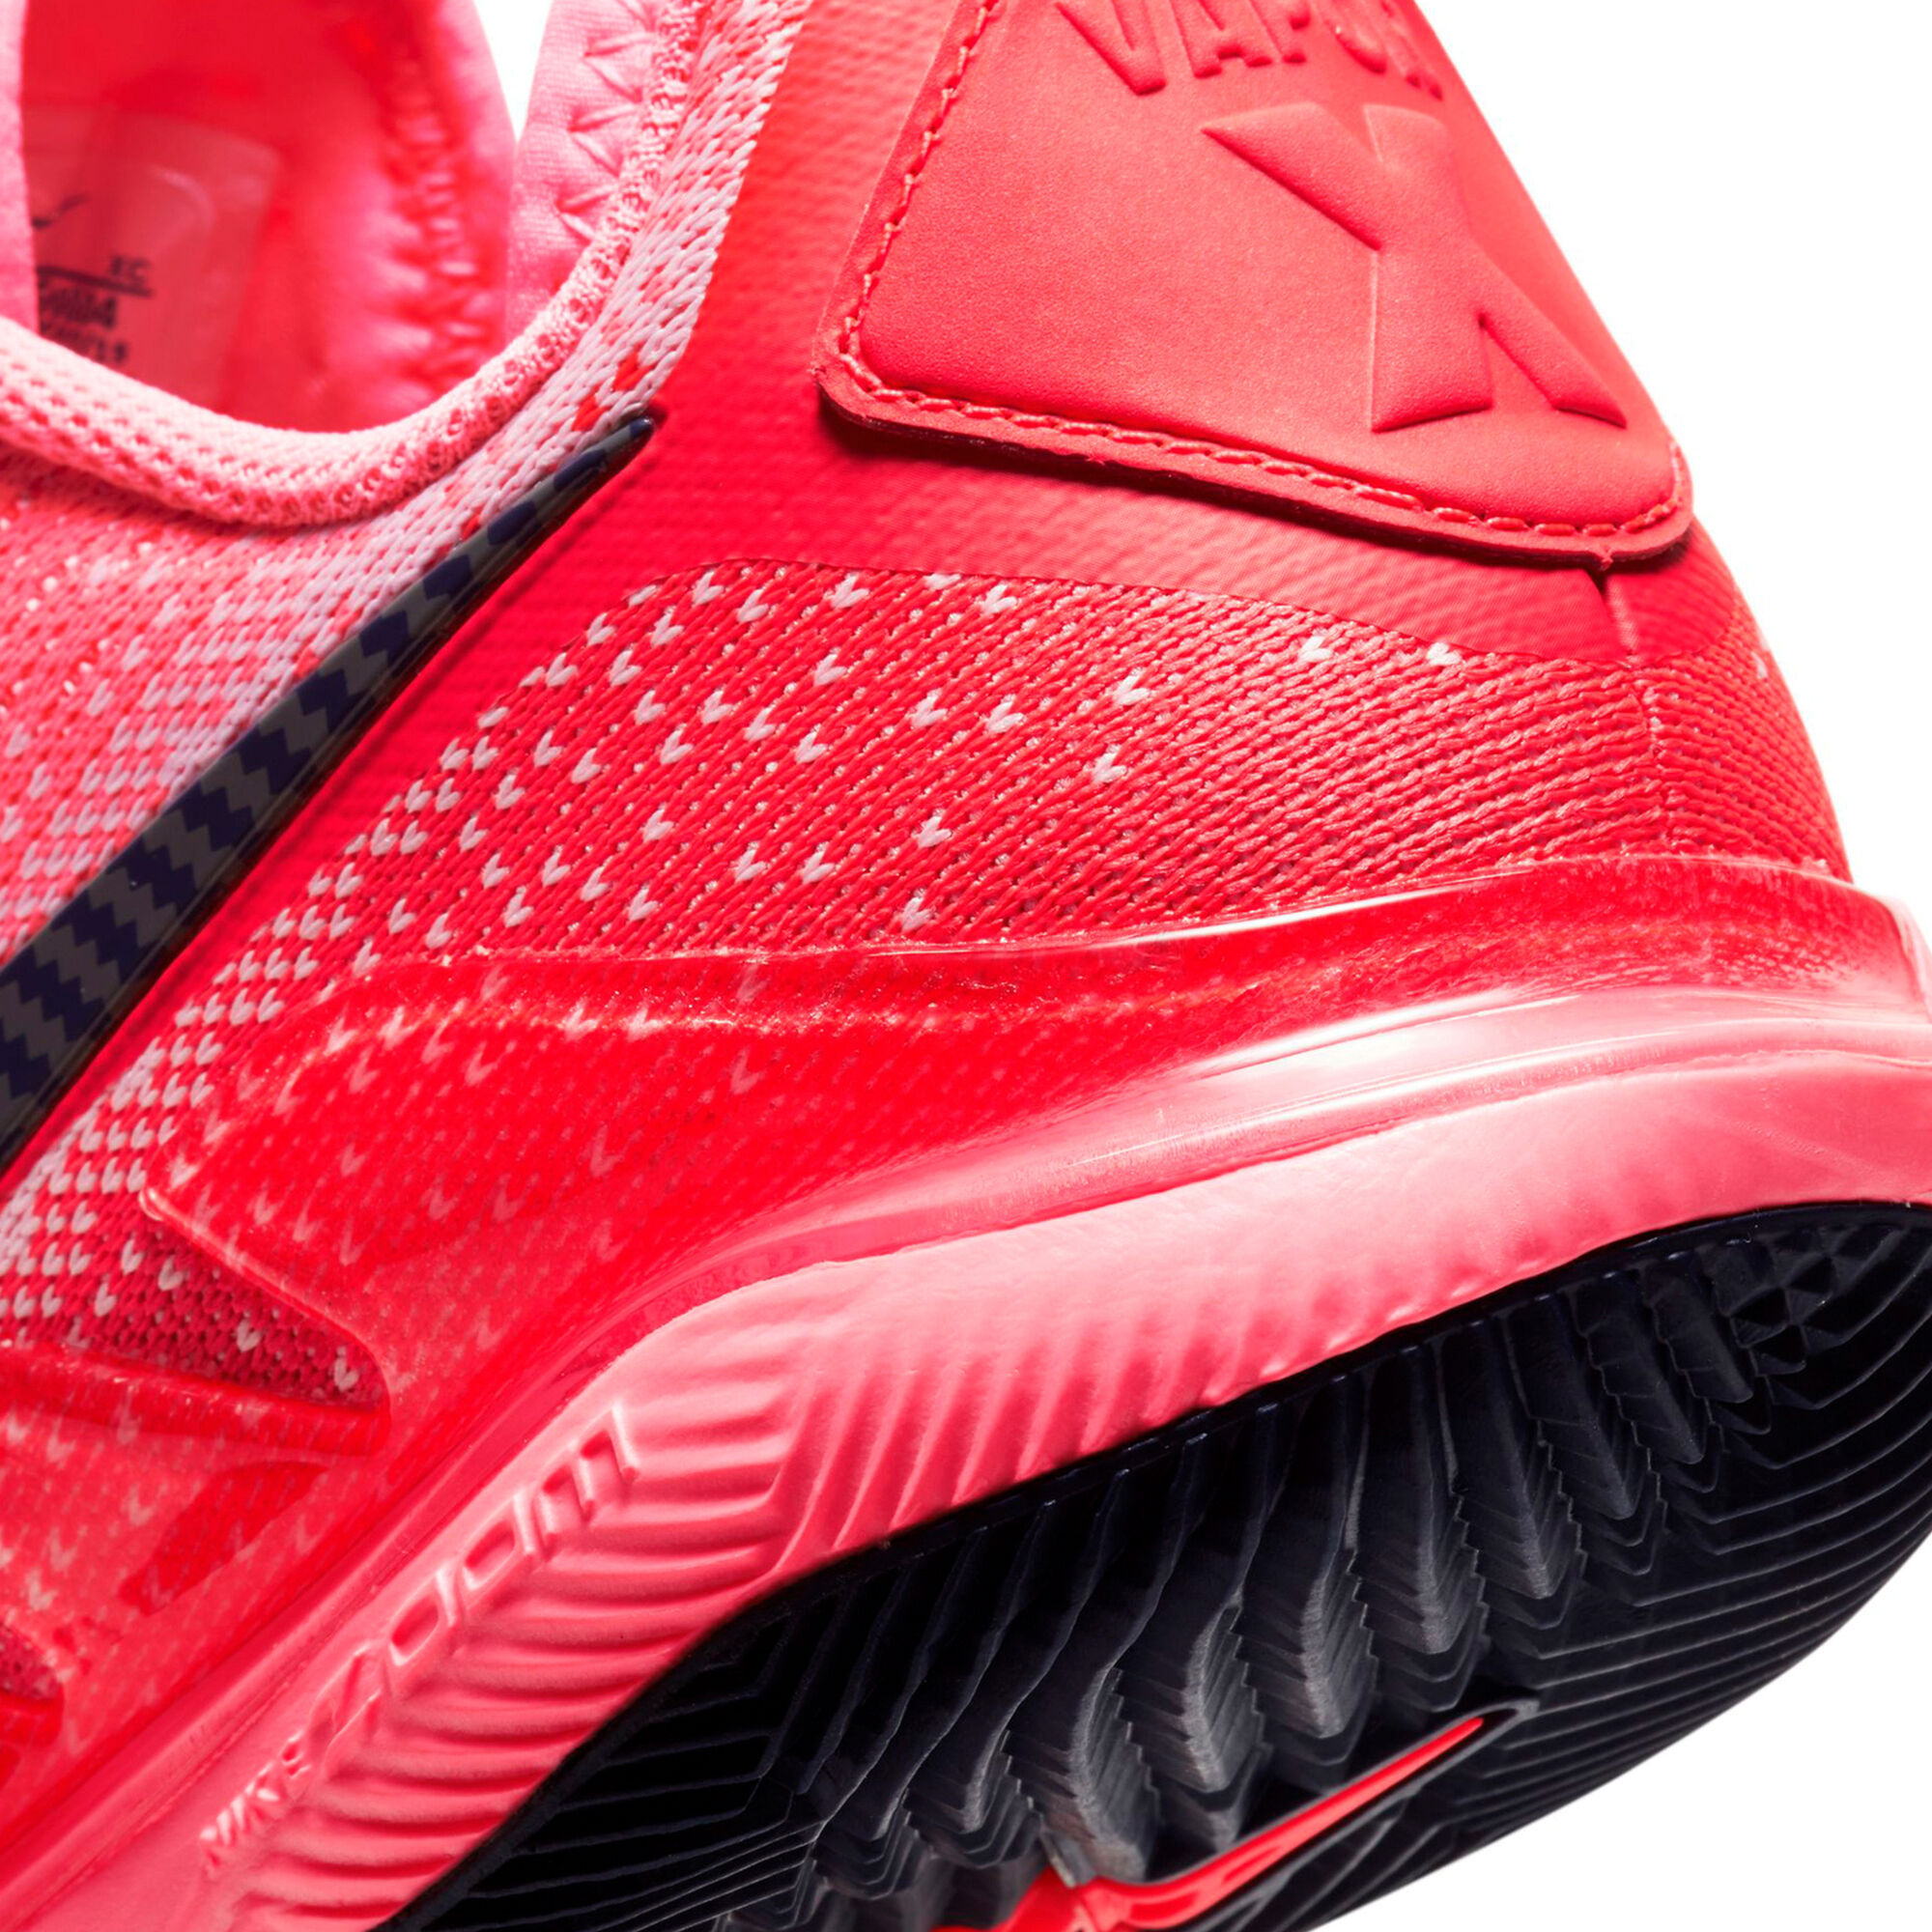 Nike Air Zoom Vapor Knit Zapatilla Las Superficies Mujeres - Rojo Rosa online | Tennis-Point